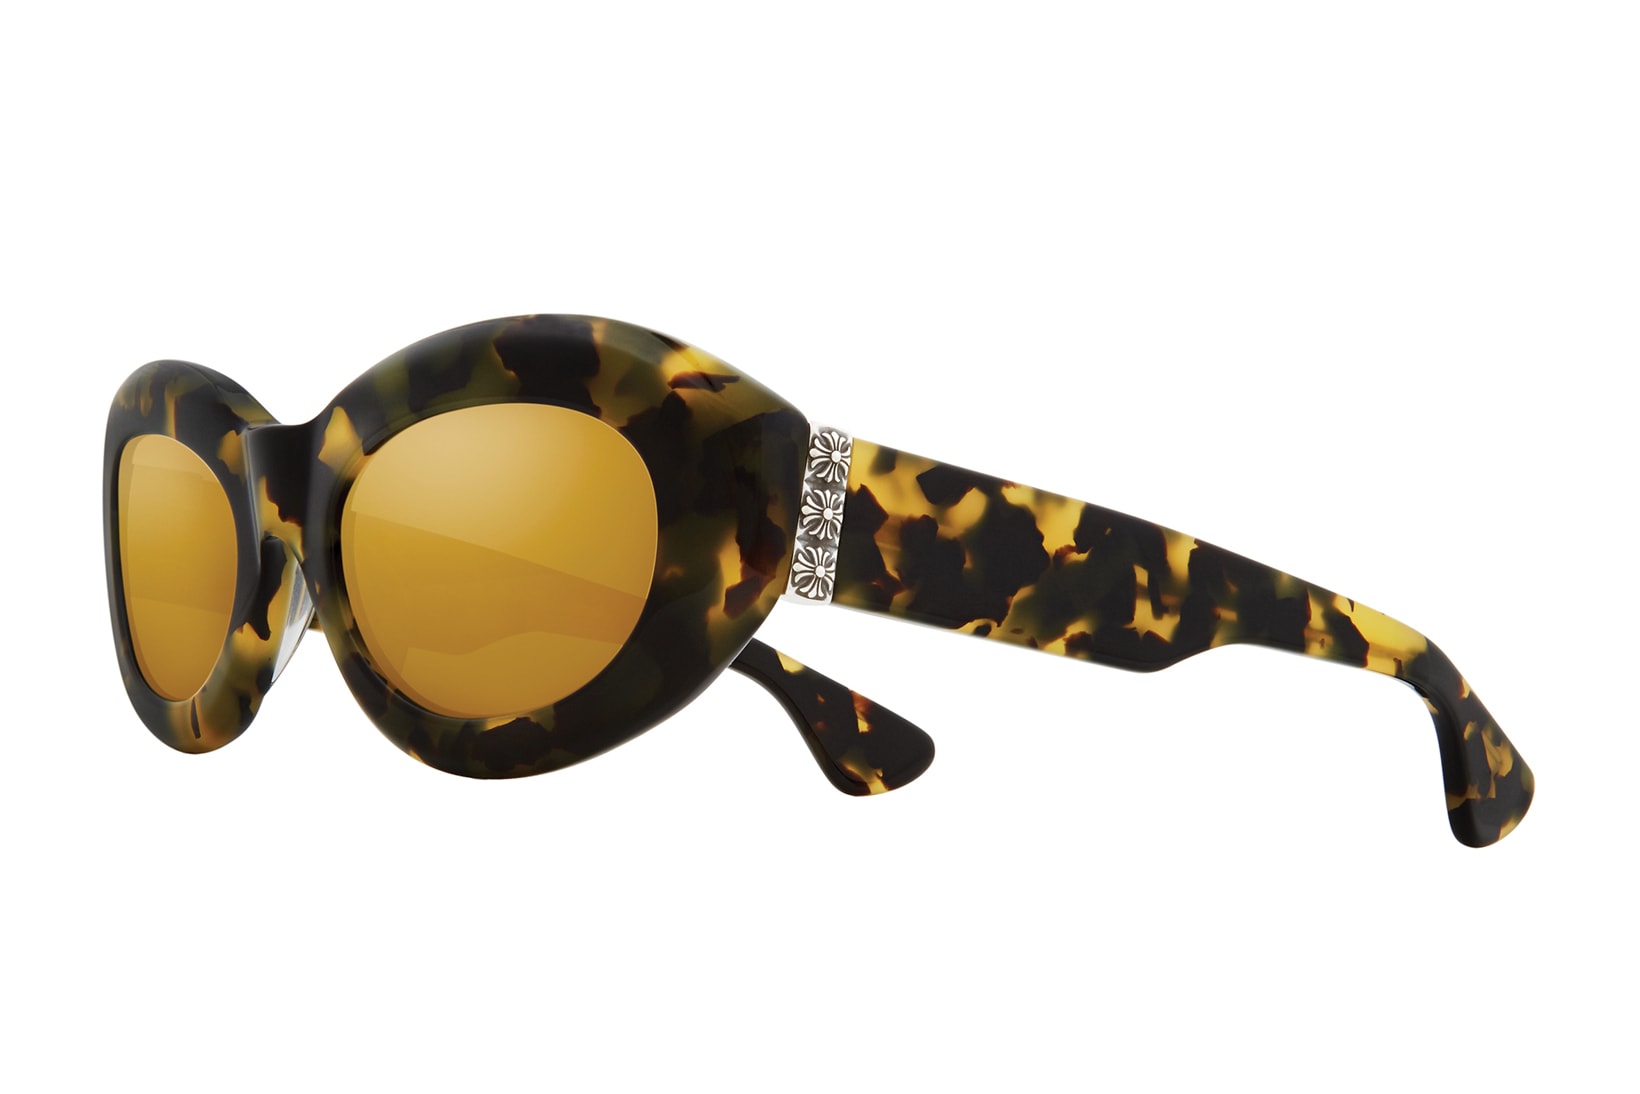 Chrome Hearts Sunglasses SLUTERELLA HOT Laurie Lynn Stark Capsule Collection